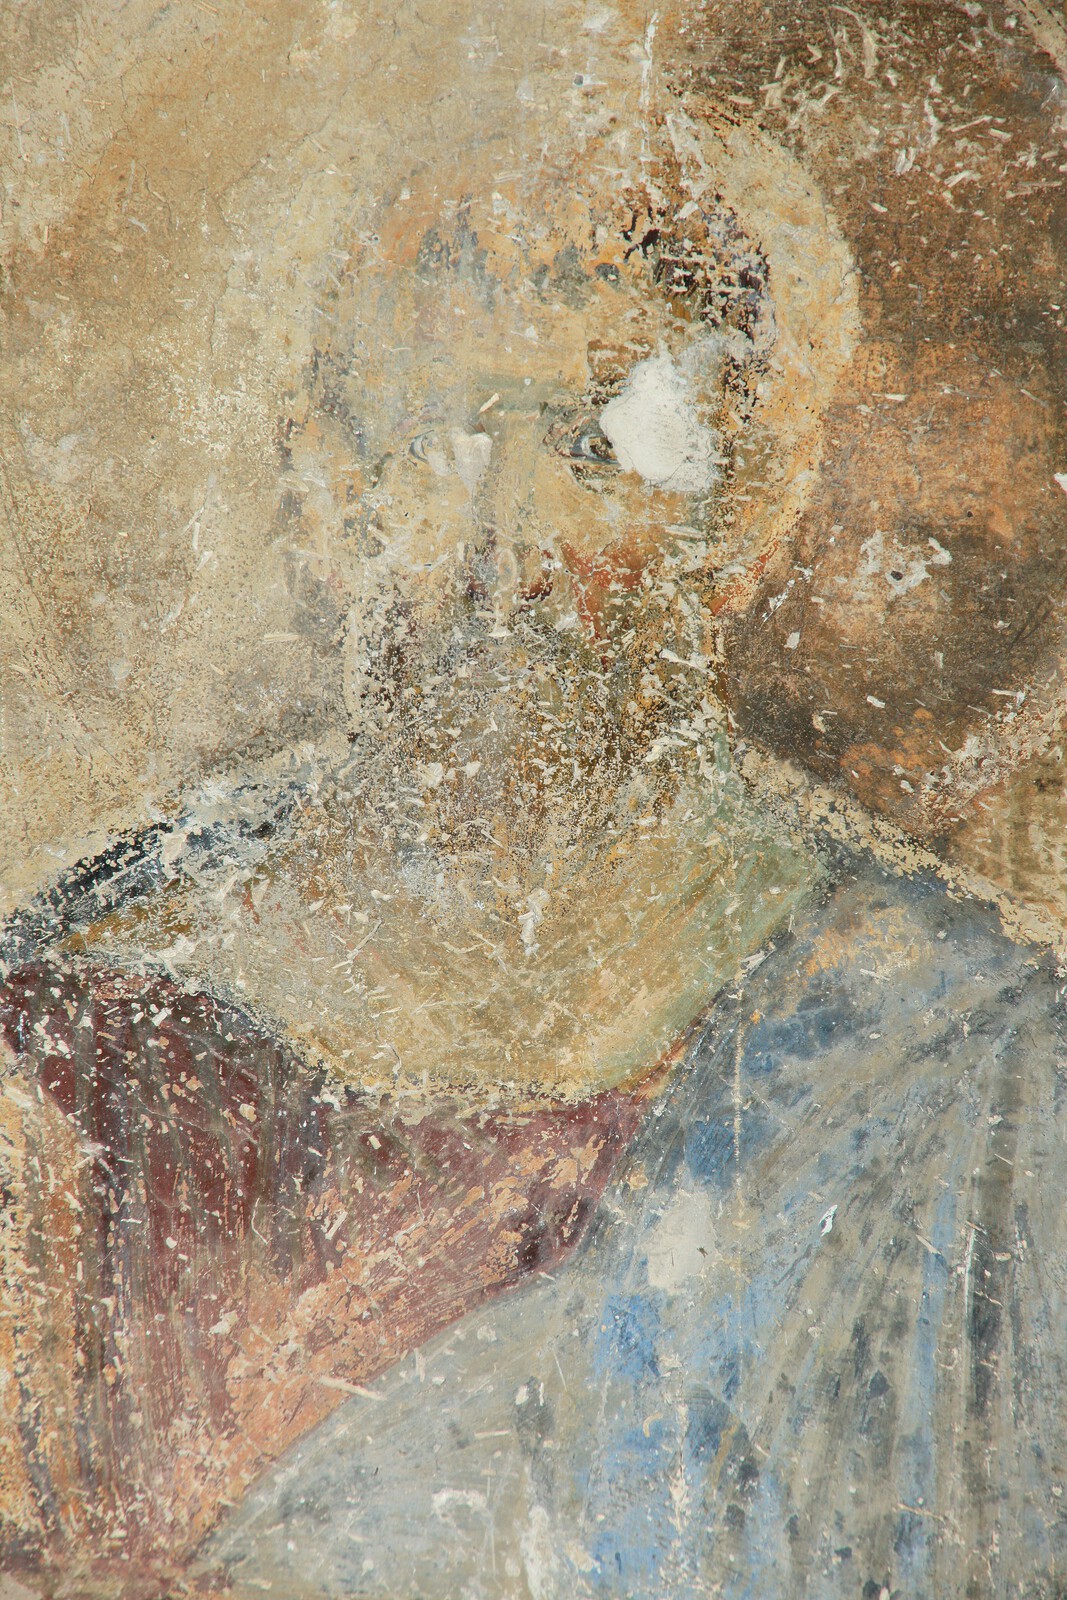 Unidentified аpostle, detail